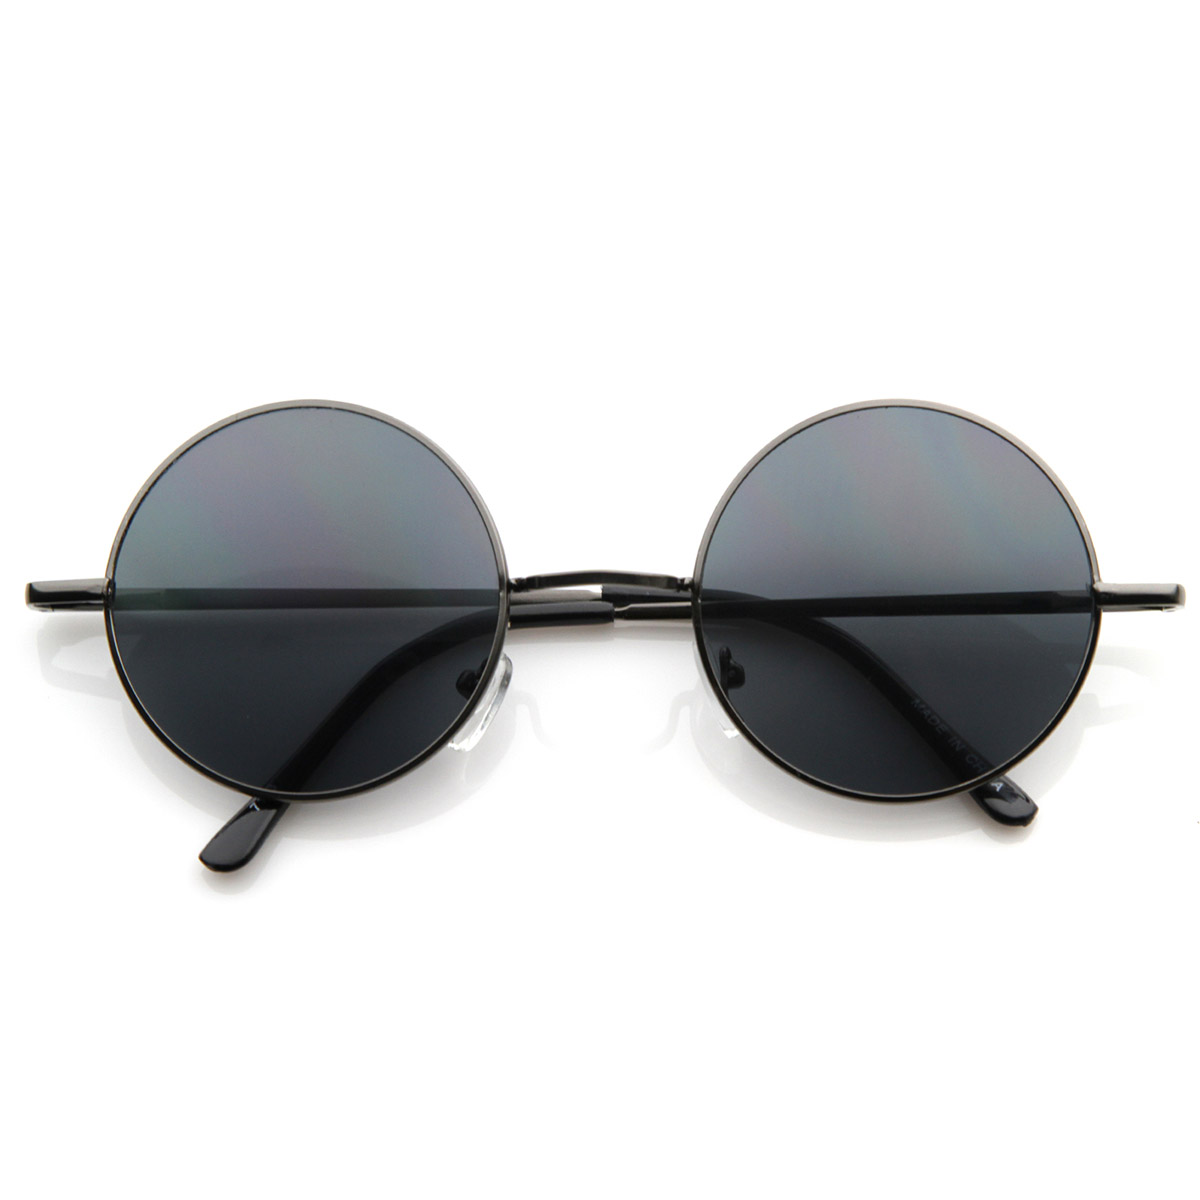 Lennon Style Round Circle Metal Sunglasses w/ Color Lens Tint | eBay